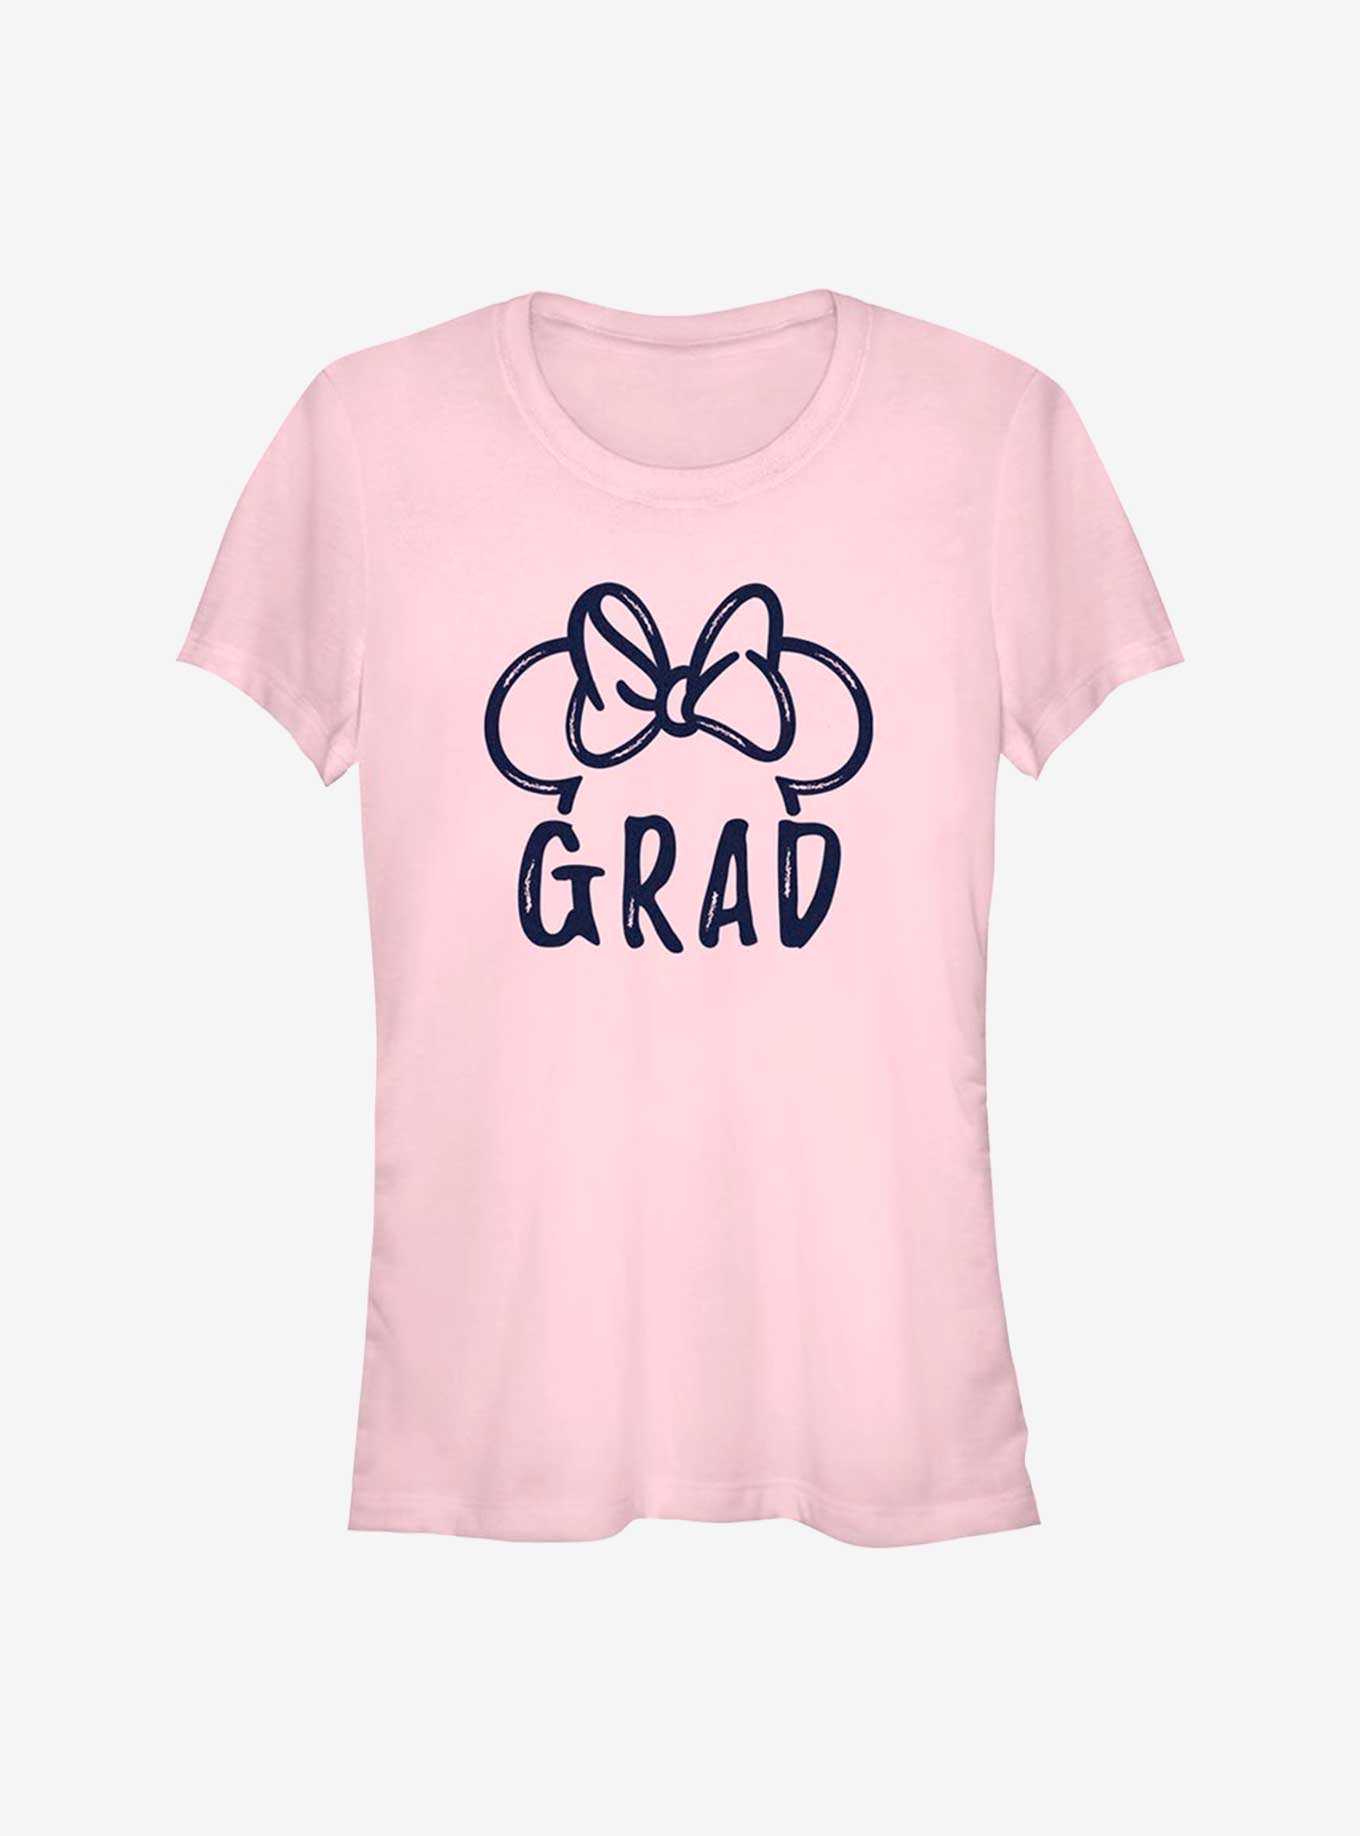 Disney Minnie Mouse Grad Ears Girls T-Shirt, , hi-res